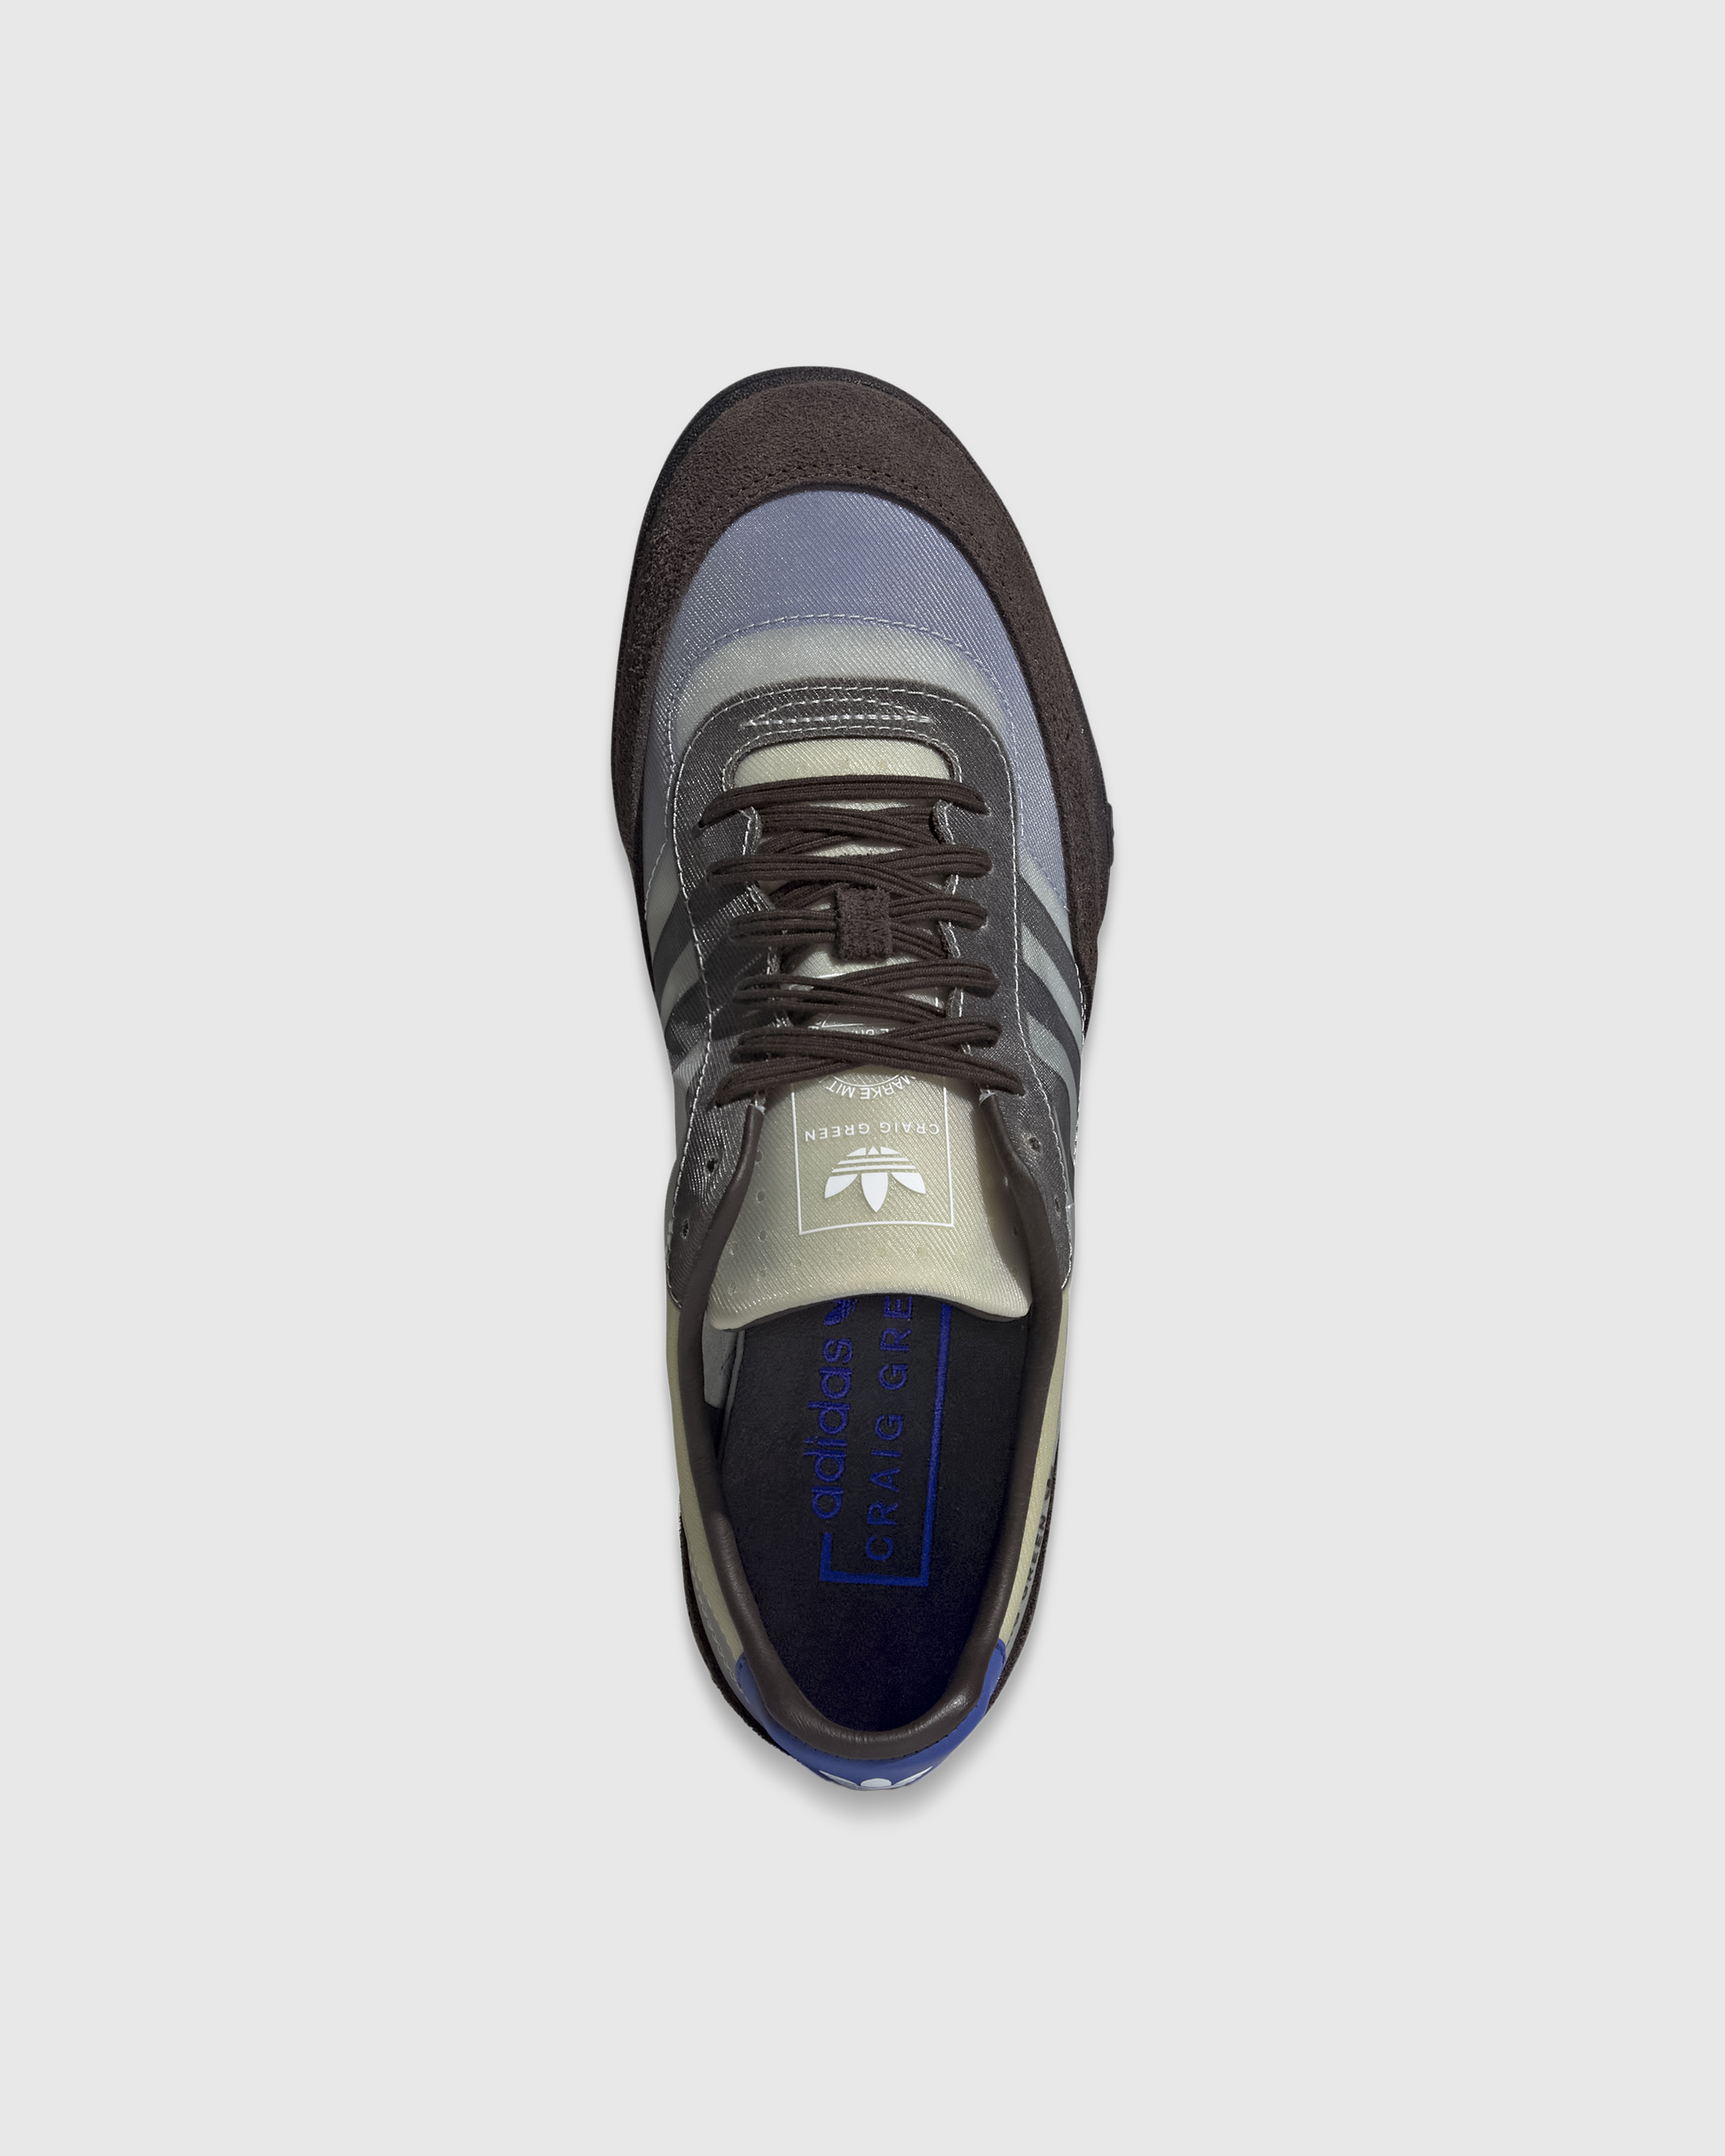 Adidas x Craig Green – Squash Polta Akh Multi/Core White/Gum - Low Top Sneakers - Multi - Image 5